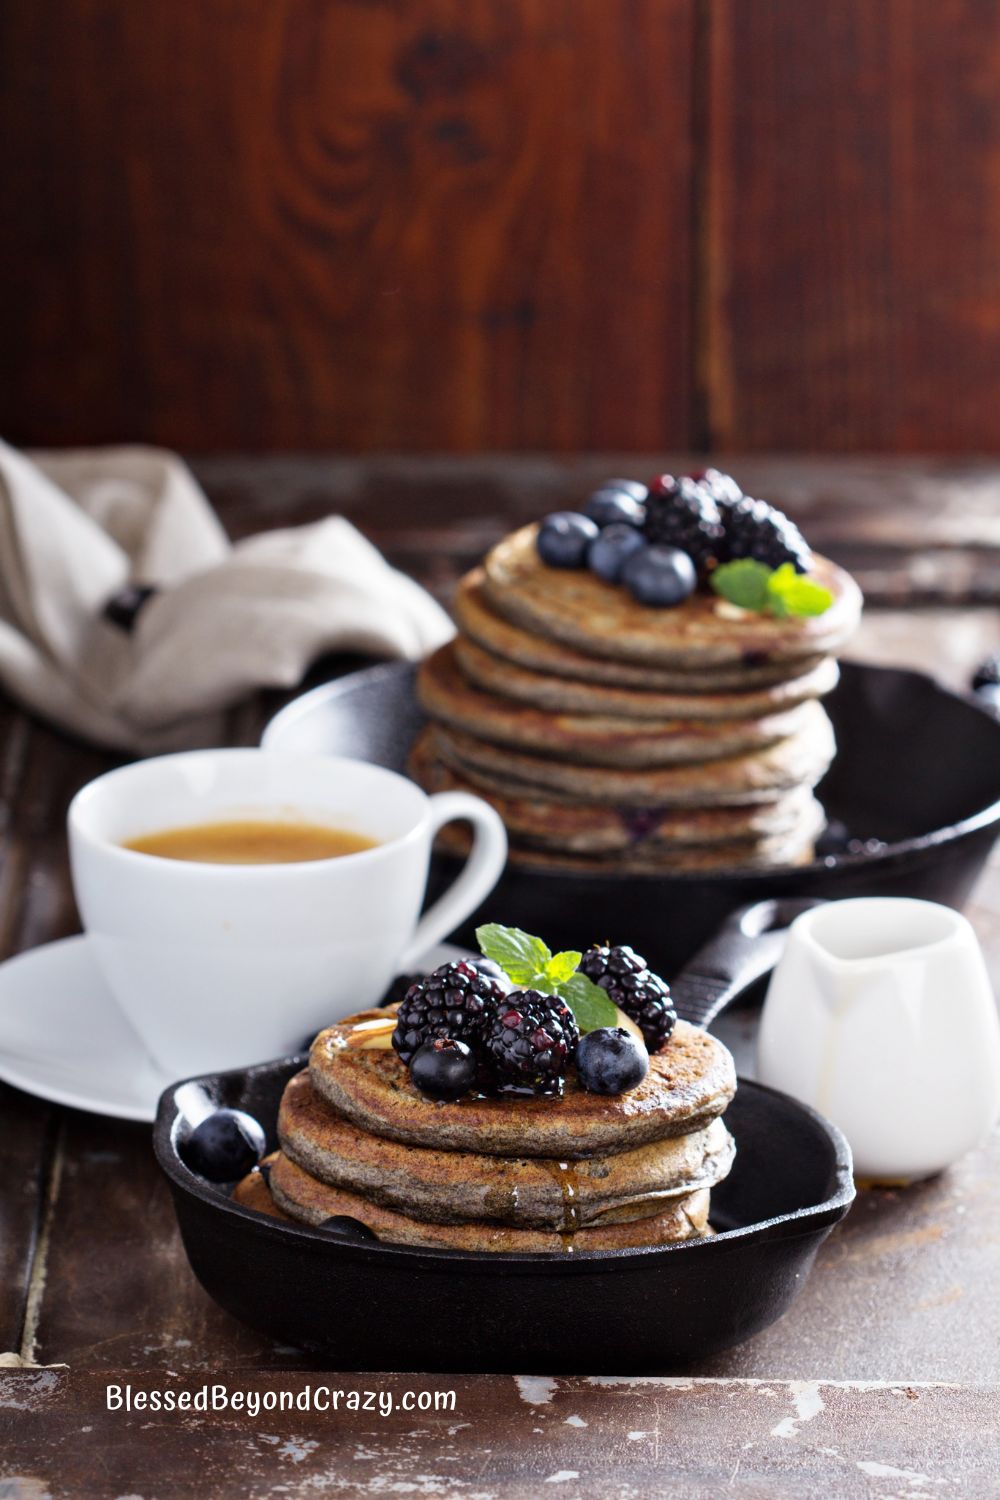 Ready to eat stacks of blueberry buckwheat pancakes.